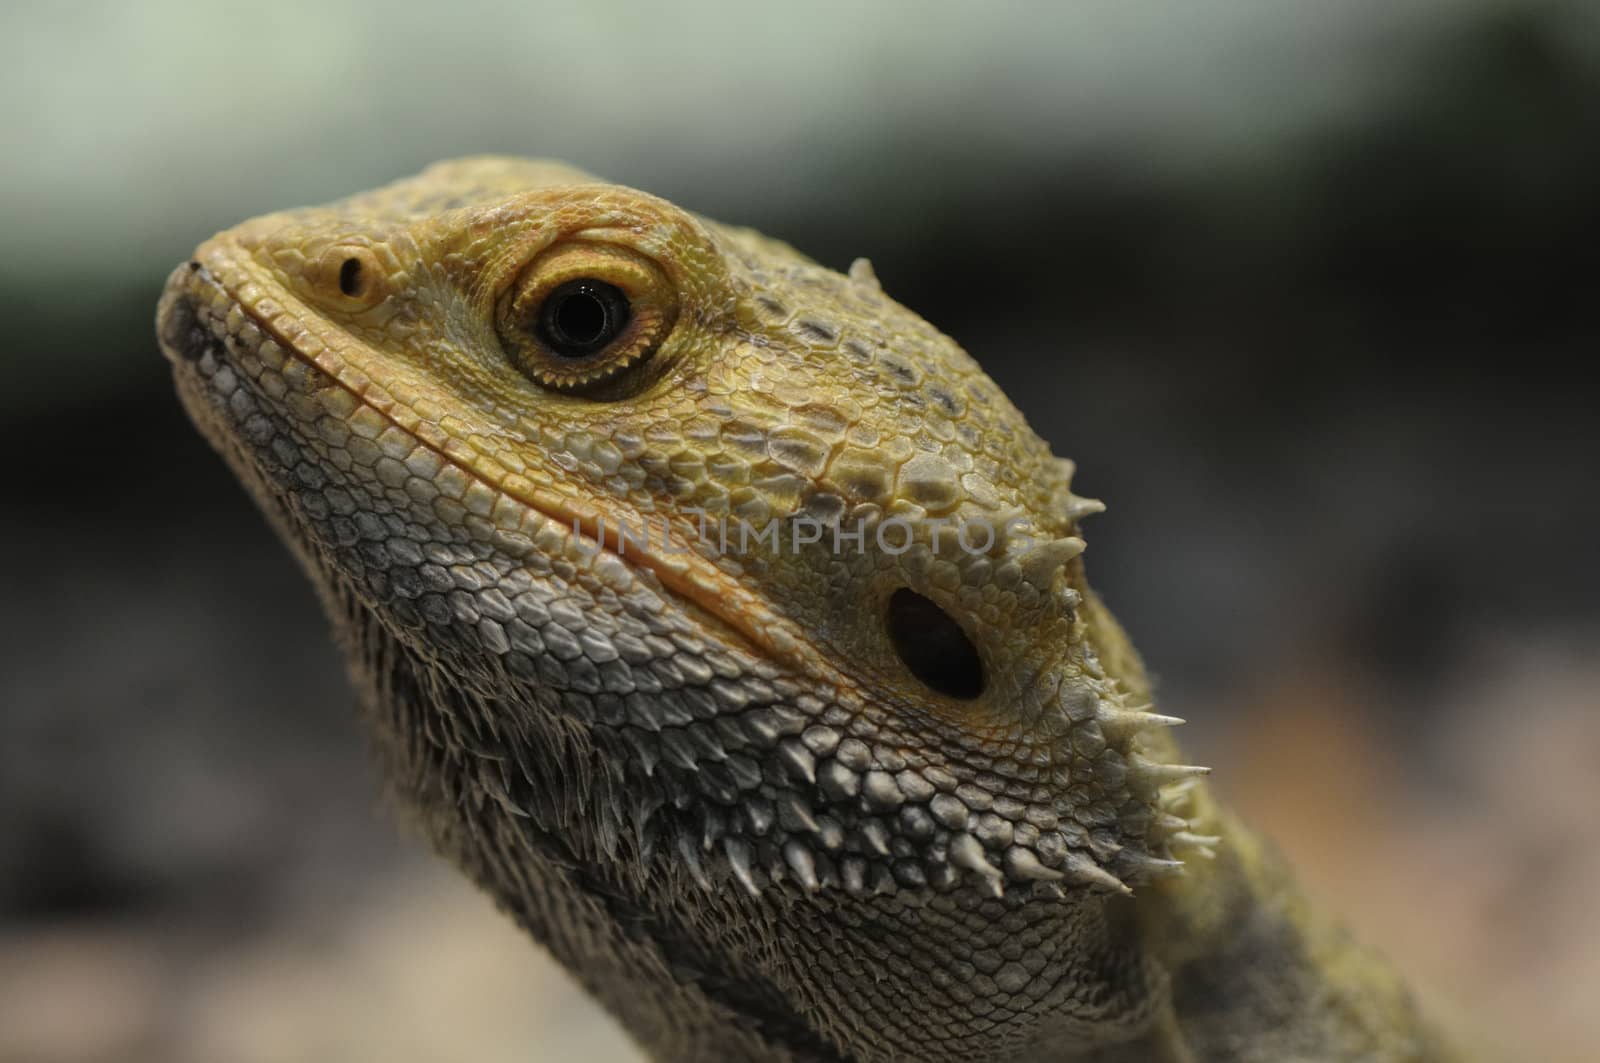 Barbed Agama - Pogona vitticeps, a little reptile living in australia.